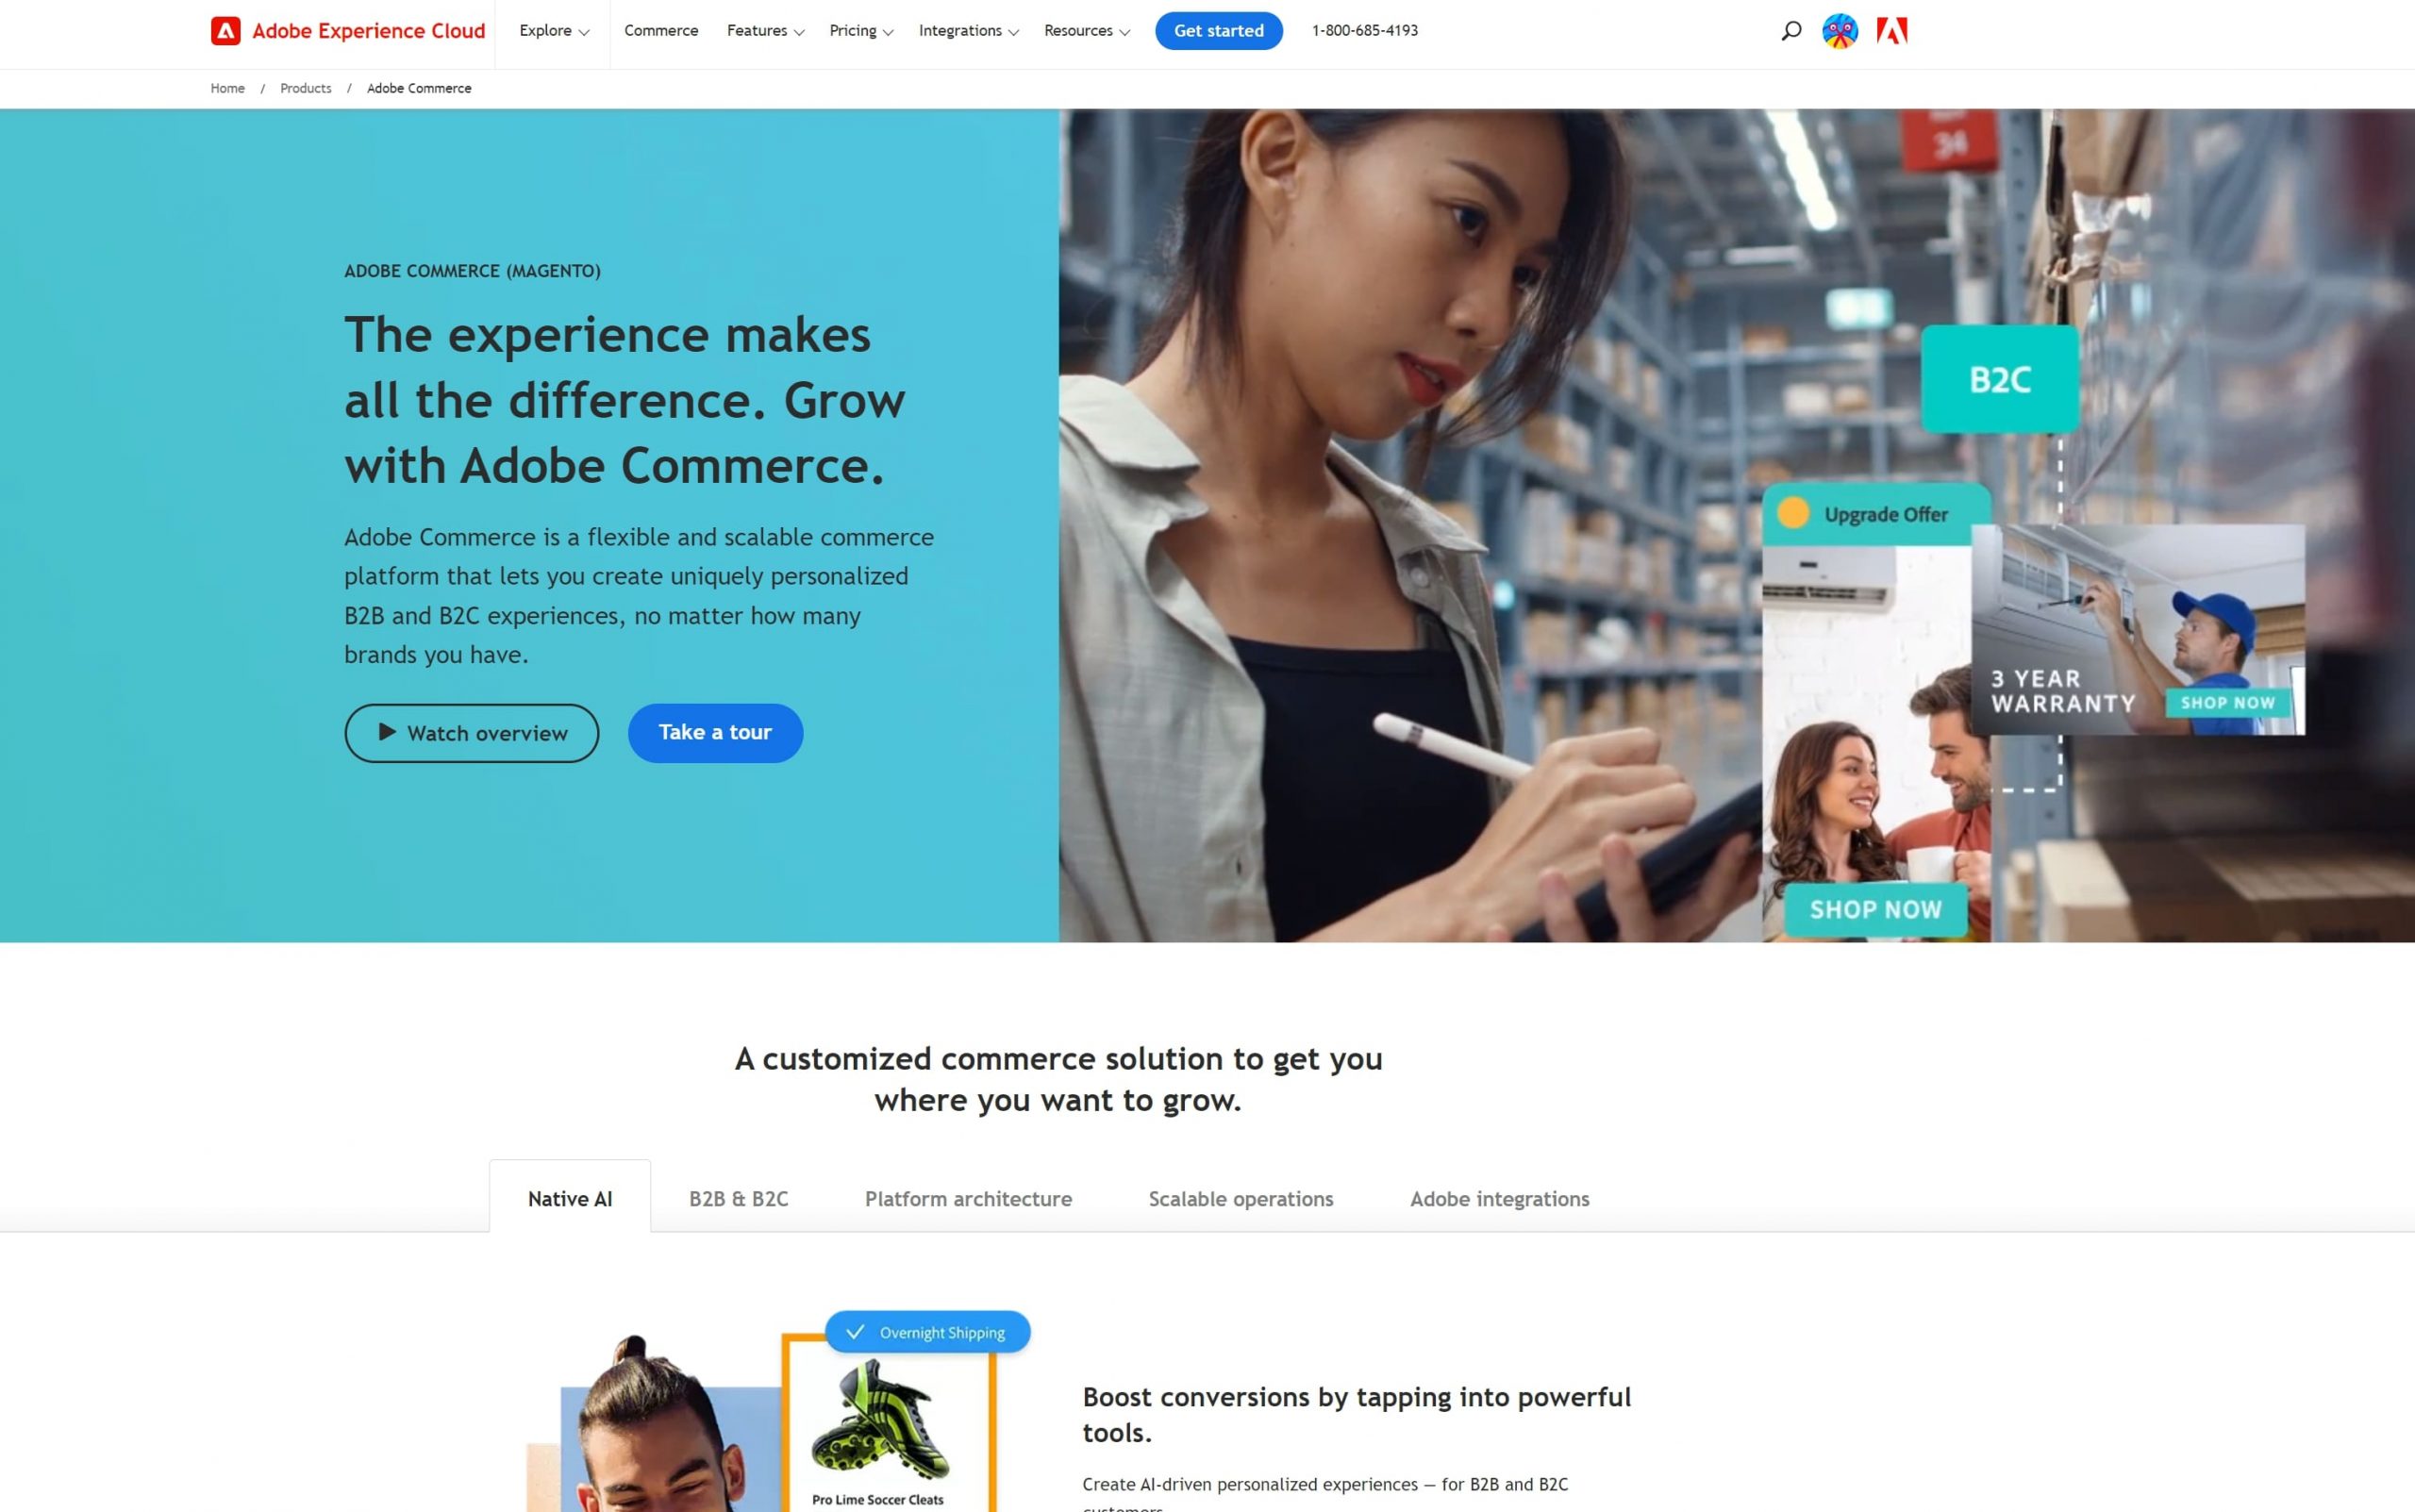 Adobe Commerce Magento Homepage